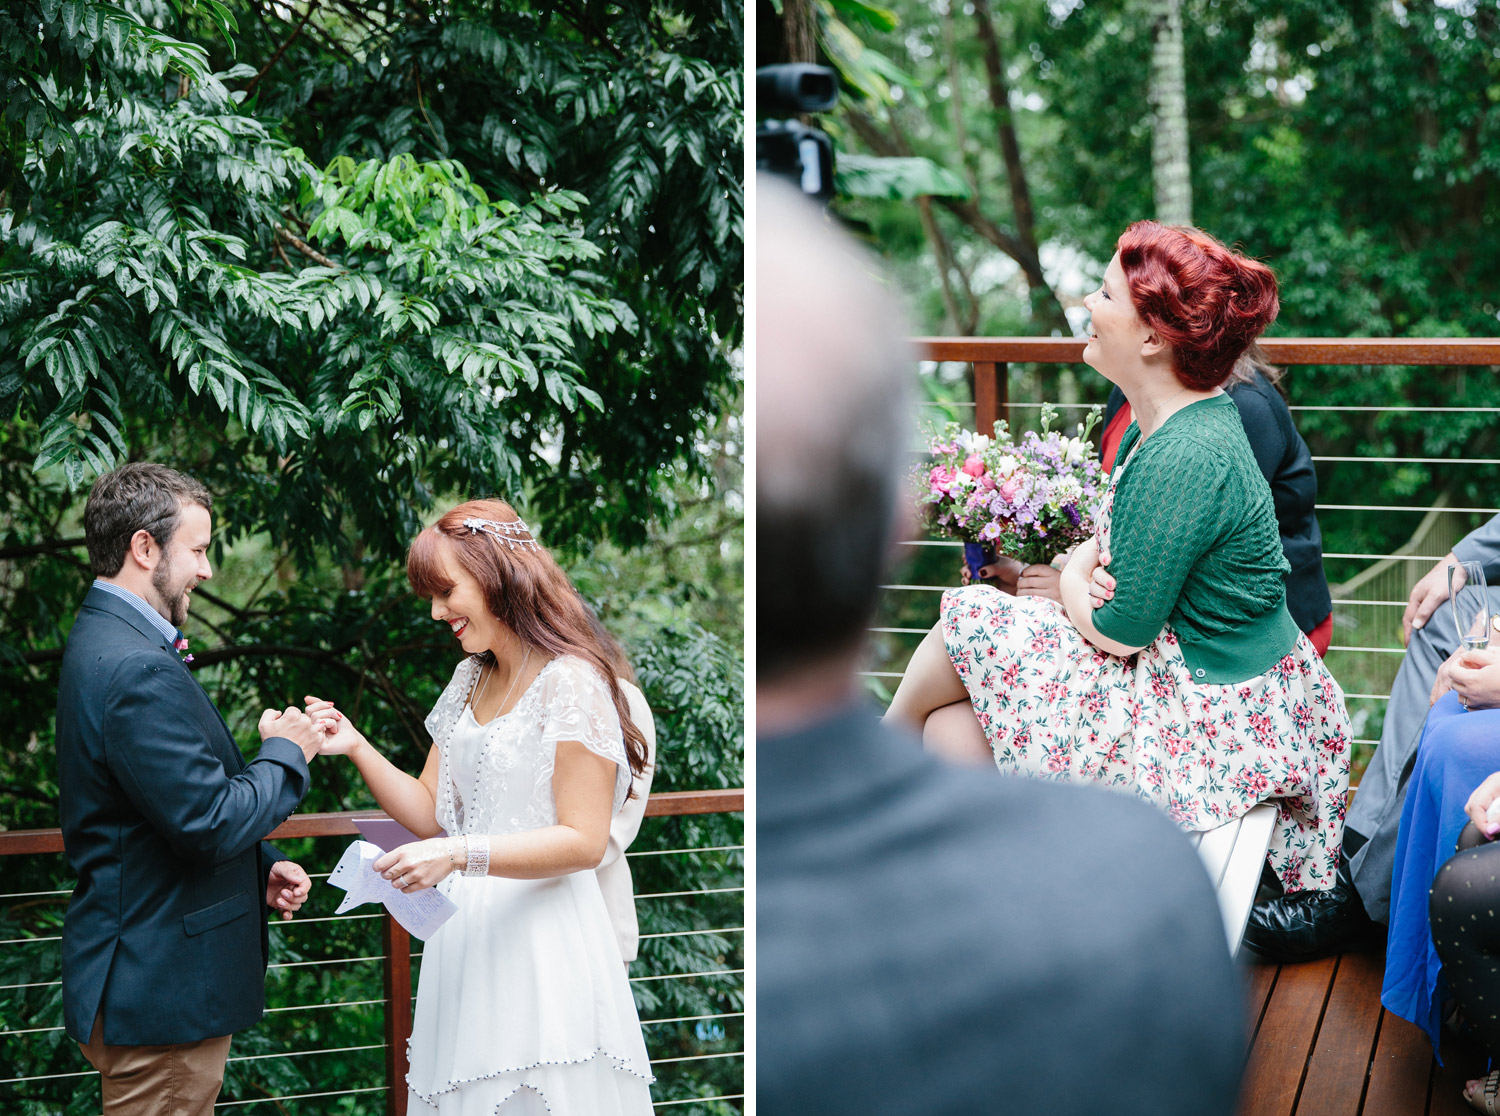 Small-intimate-wedding-Elopement-photographer-ethical-minimalist-wedding.jpg